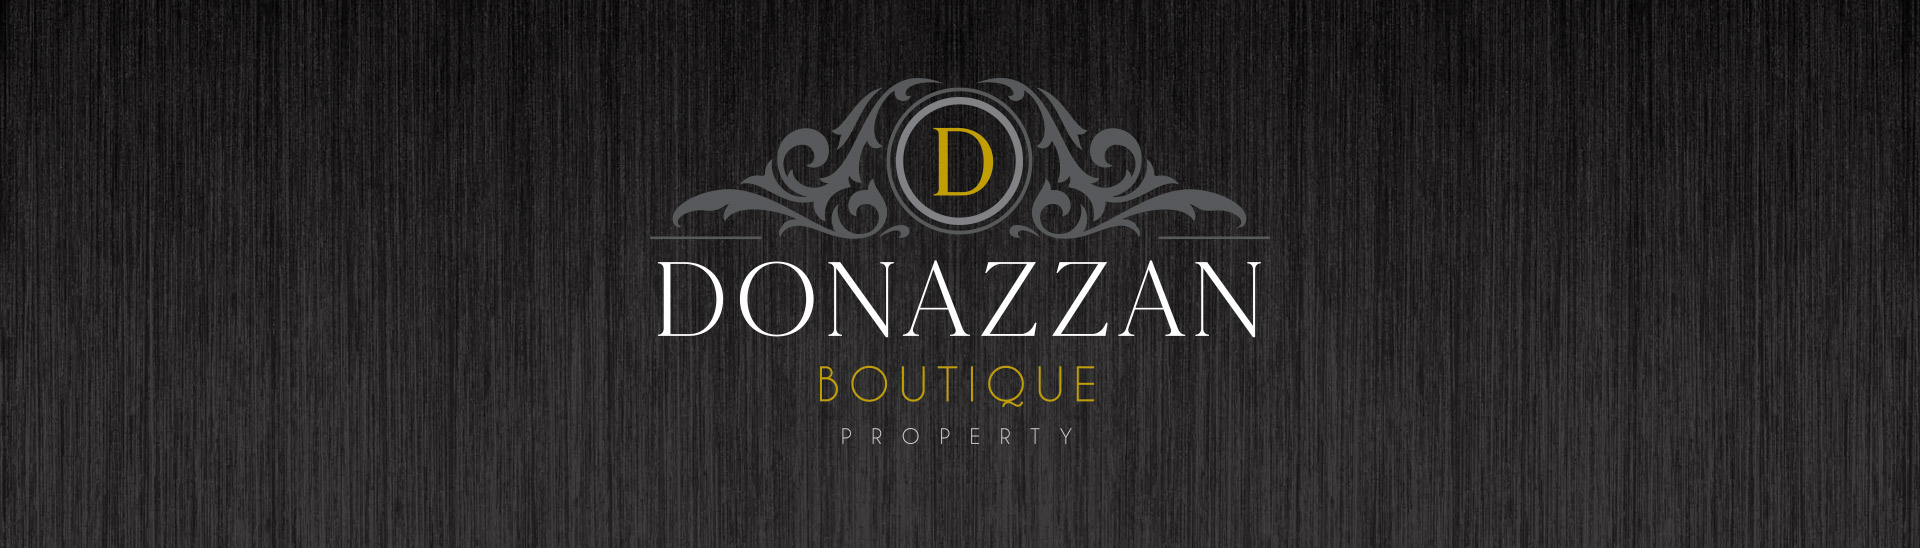 Donazzan Boutique Property